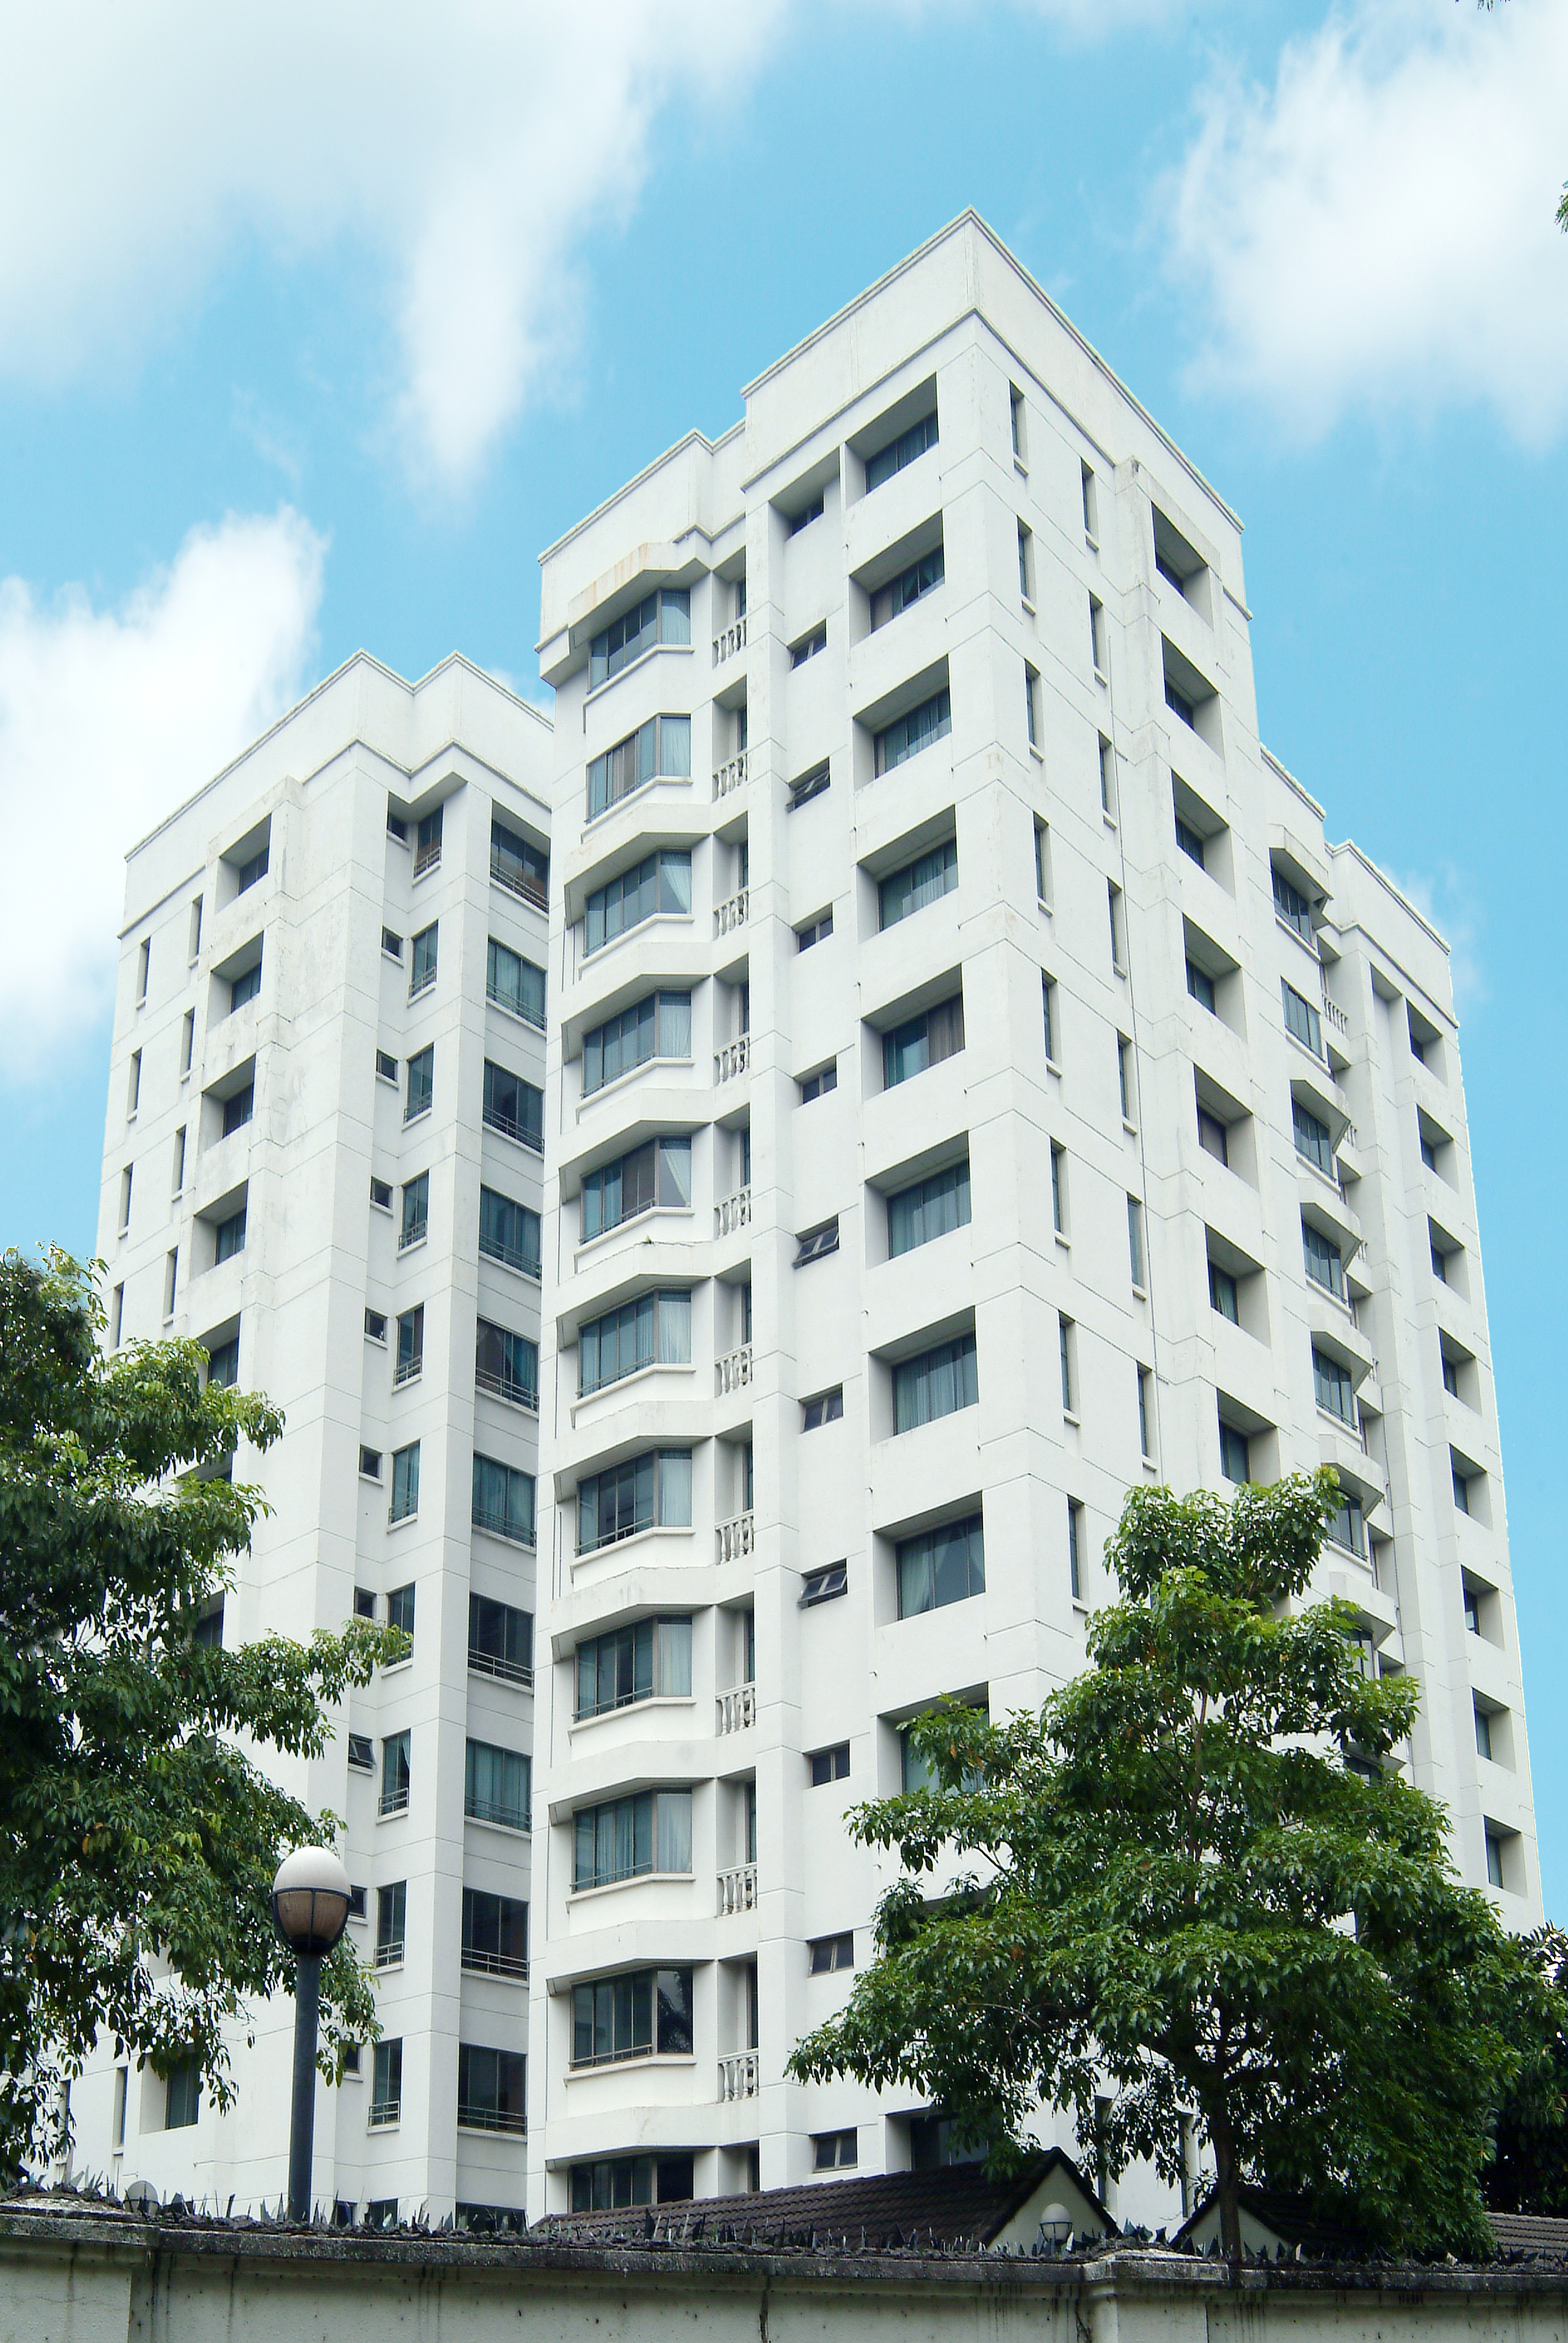 244 Units of Condominium of 12-Storey Blocks with Full Clubhouse Facilities